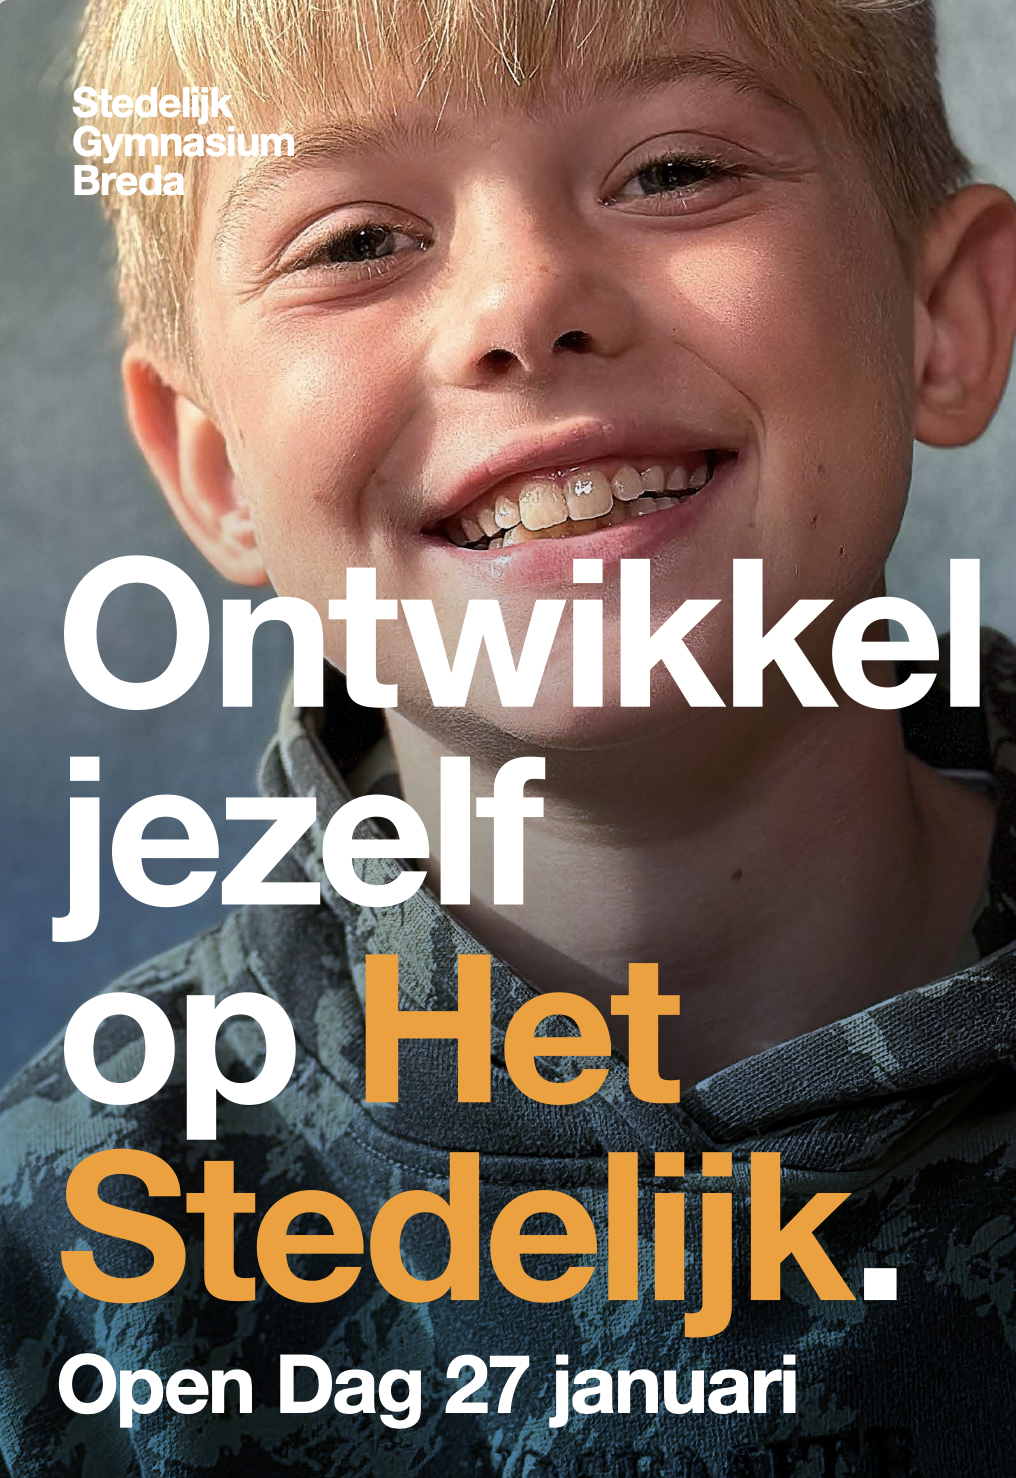 Campagne Stedelijk Gymnasium Breda